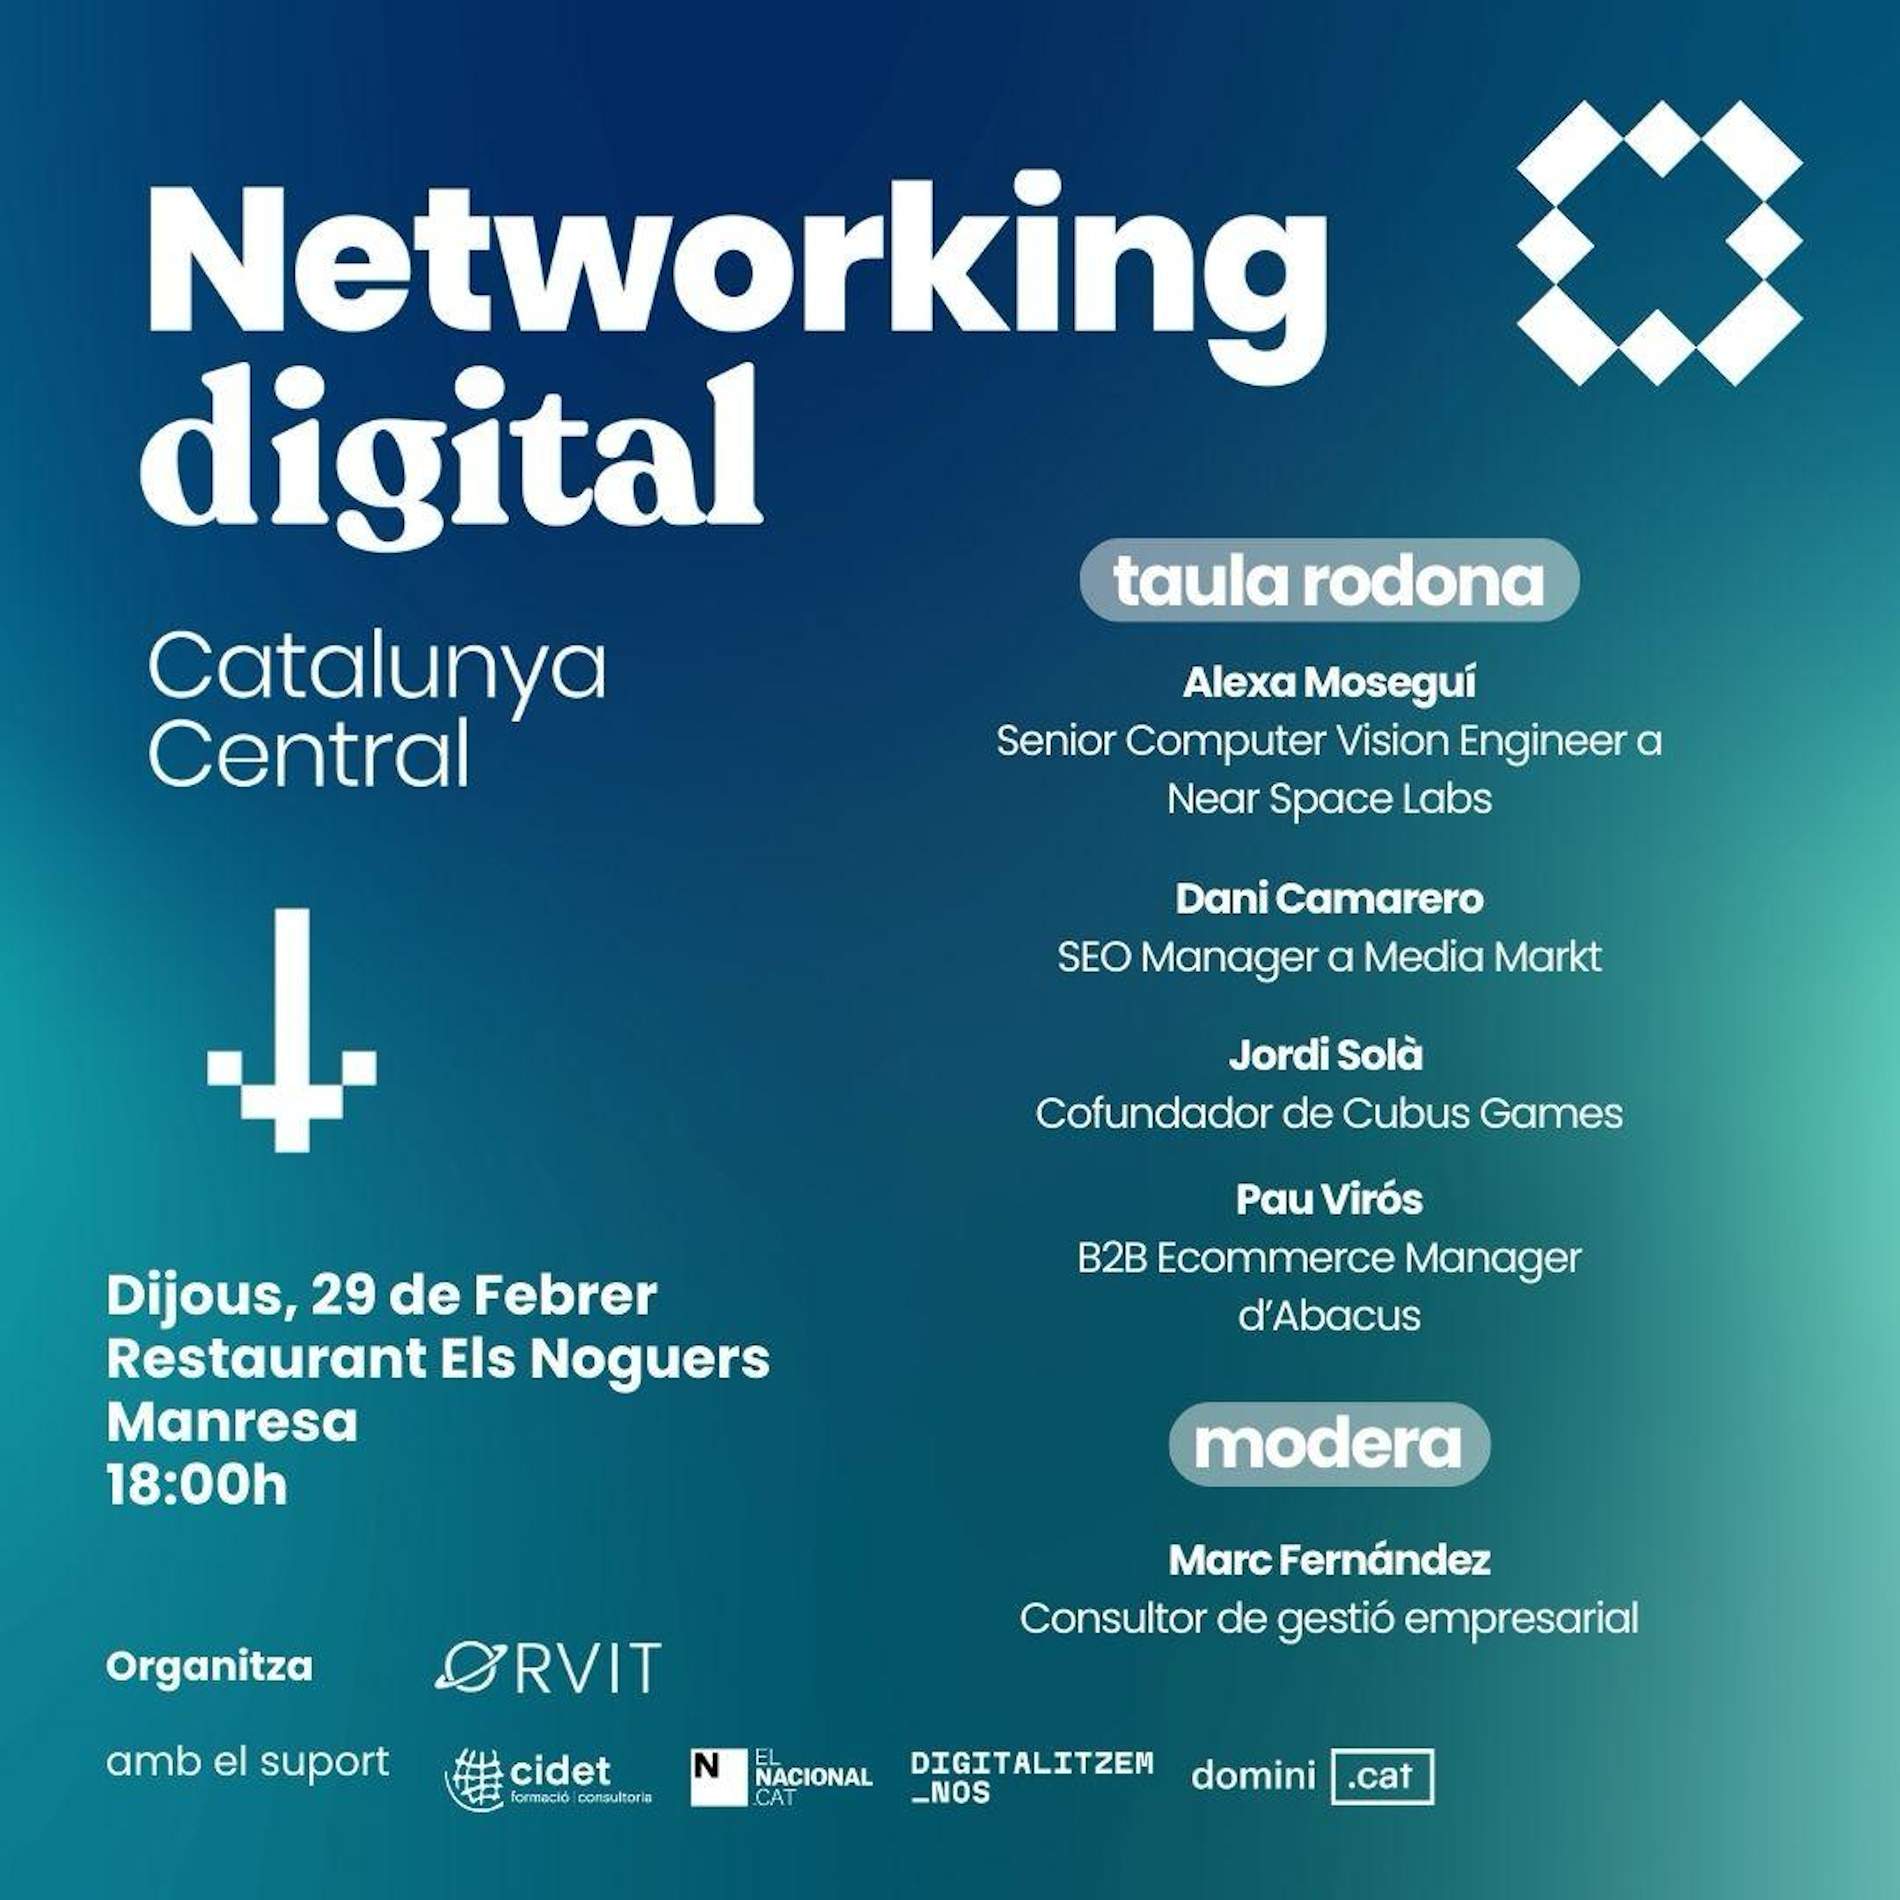 Networking digital Catalunya Central / Orvit Digital